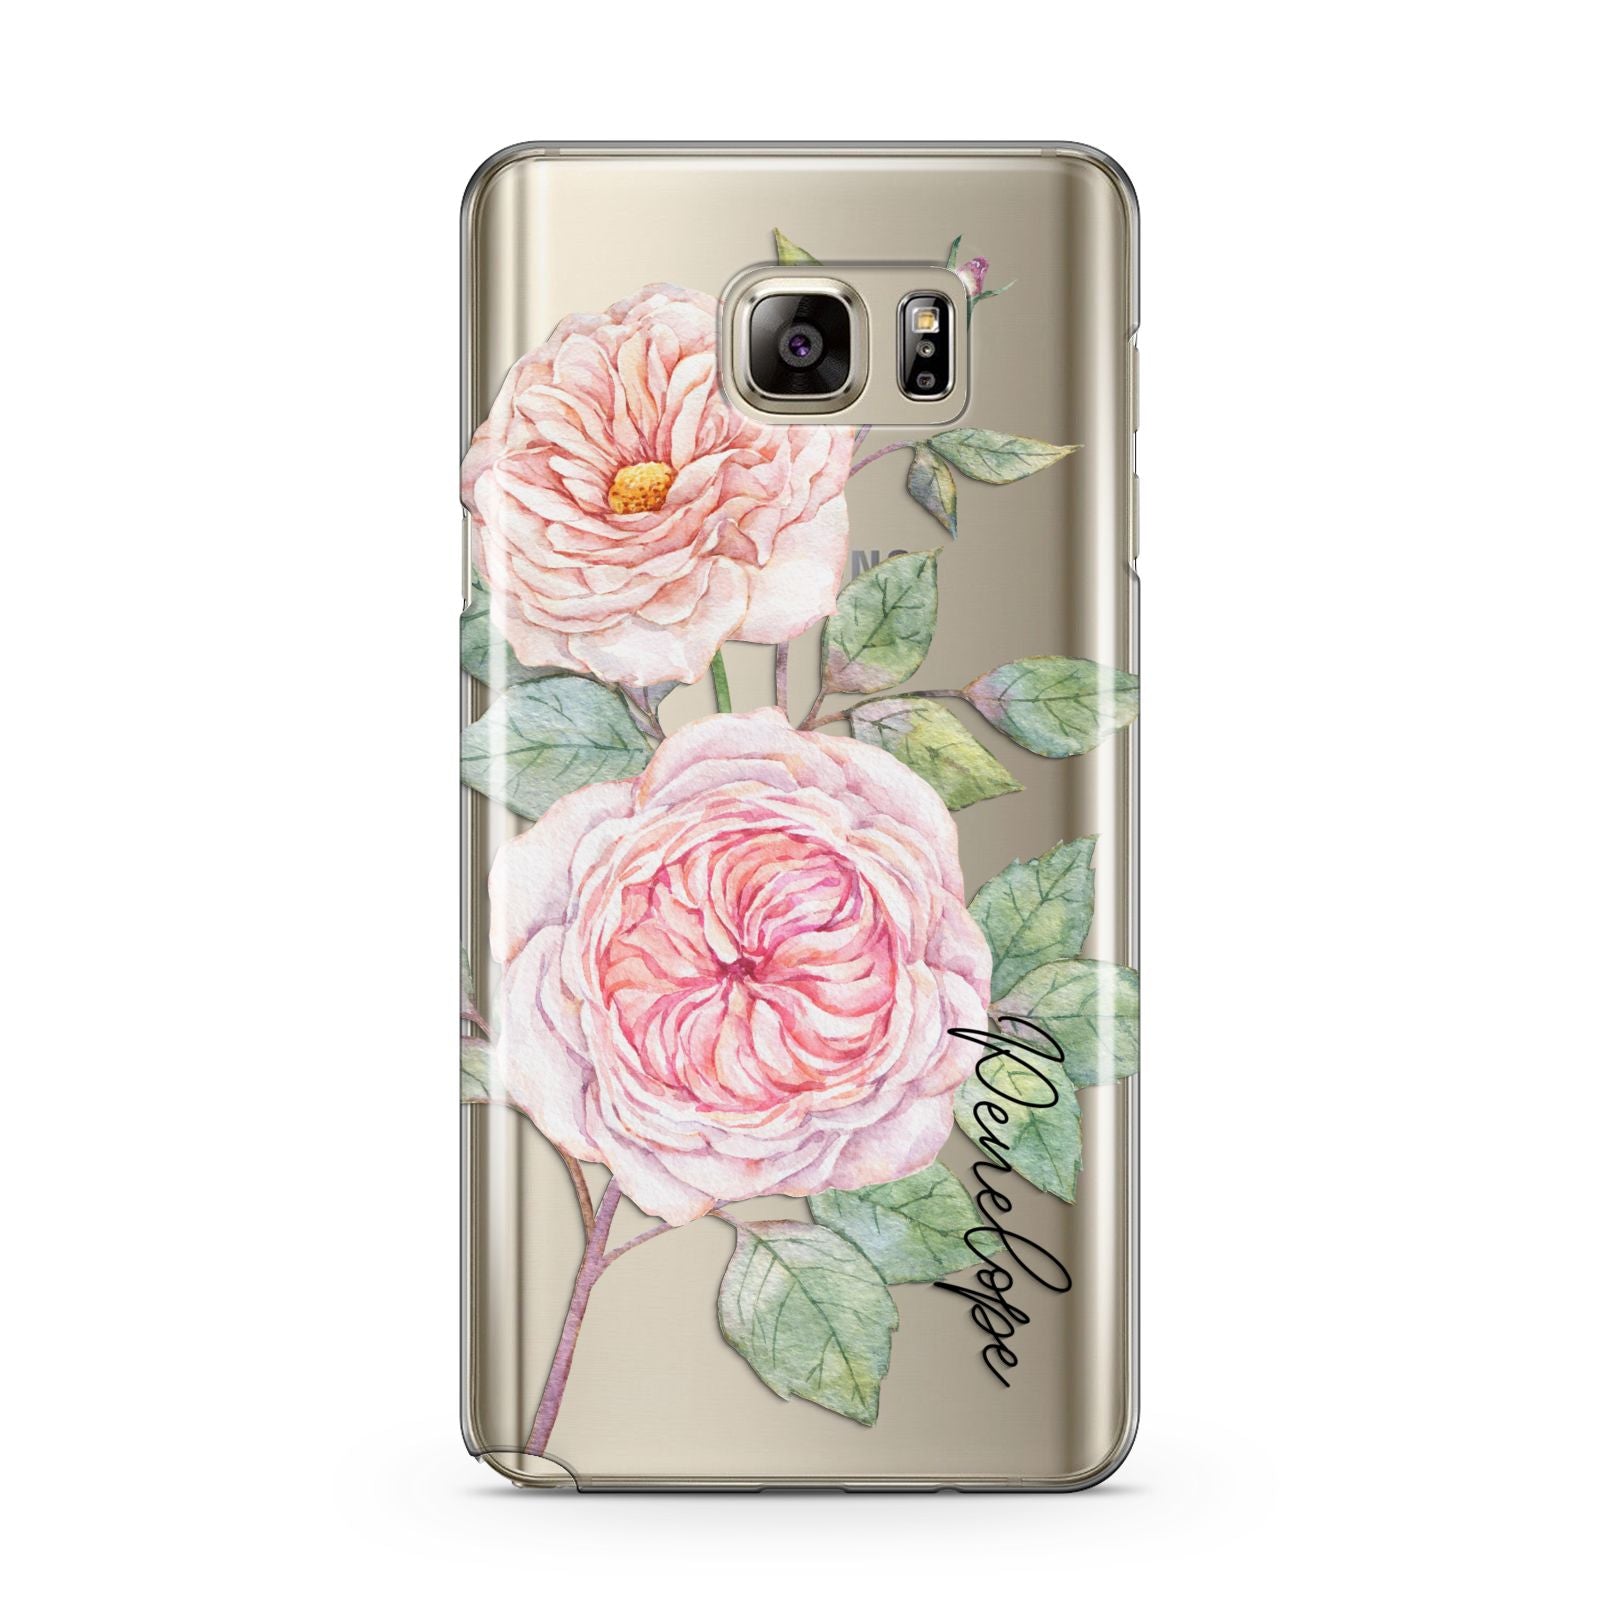 Personalised Peonies Samsung Galaxy Note 5 Case